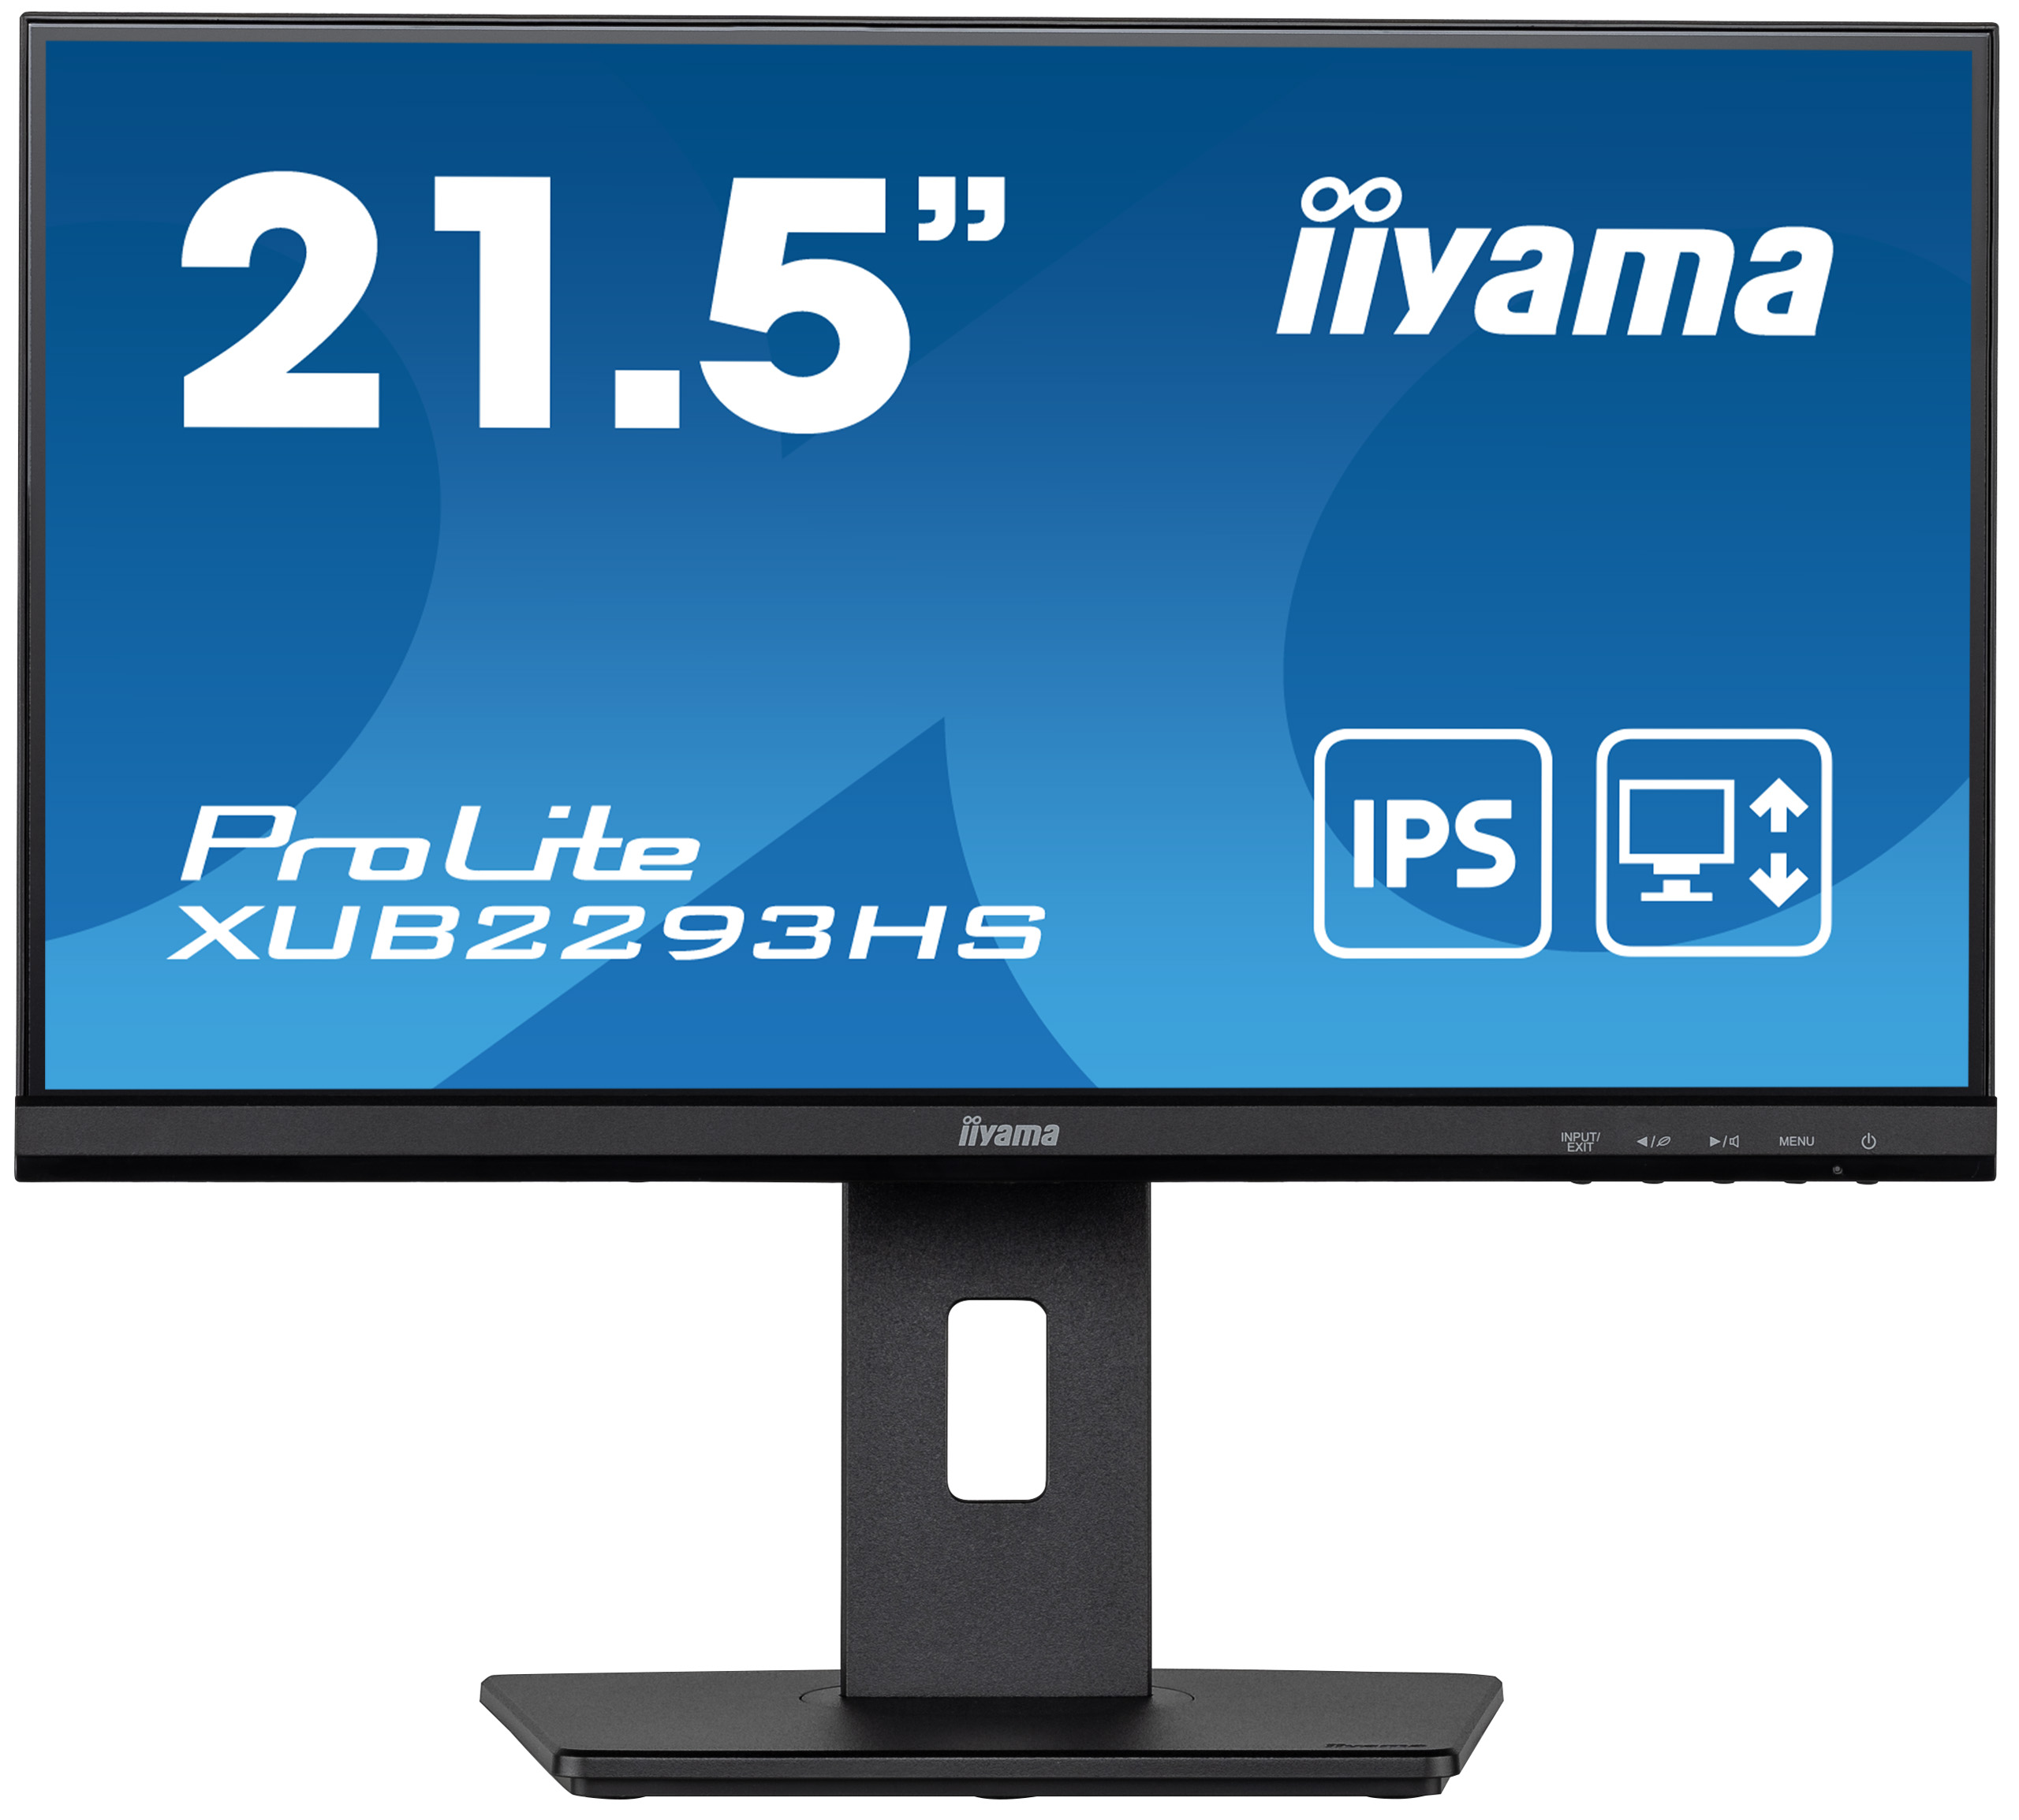 IIYAMA XUB2293HS-B5 21.5inch ETE IPS-panel 1920x1080 250cd/m2 3ms HDMI DP Speakers 15cm Height adj Stand